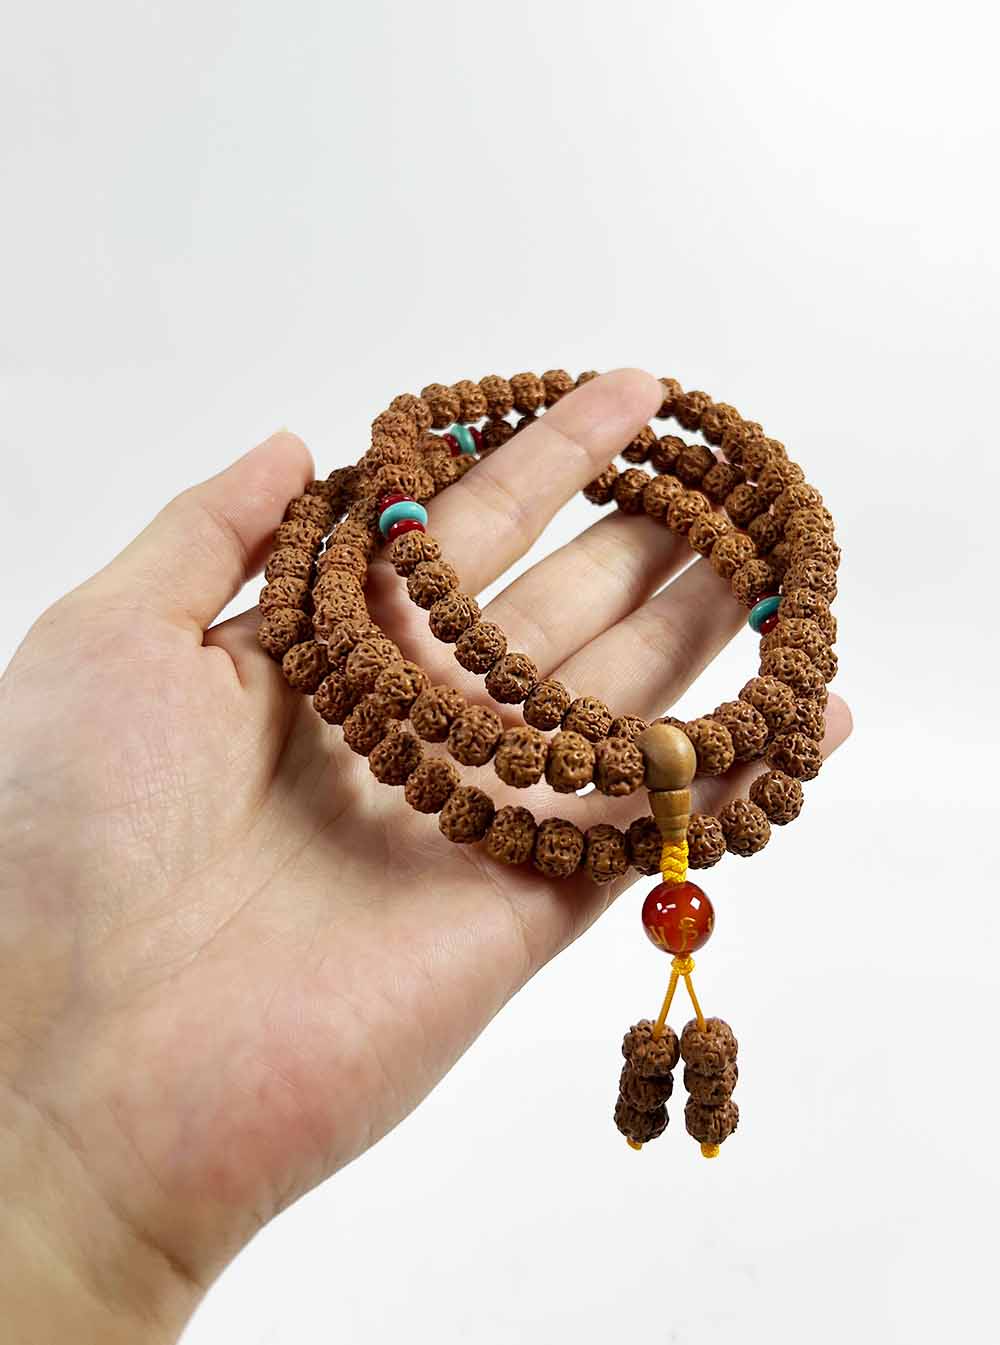 Five Mukhi Rudraksha Mala 108 Beads (6mm)